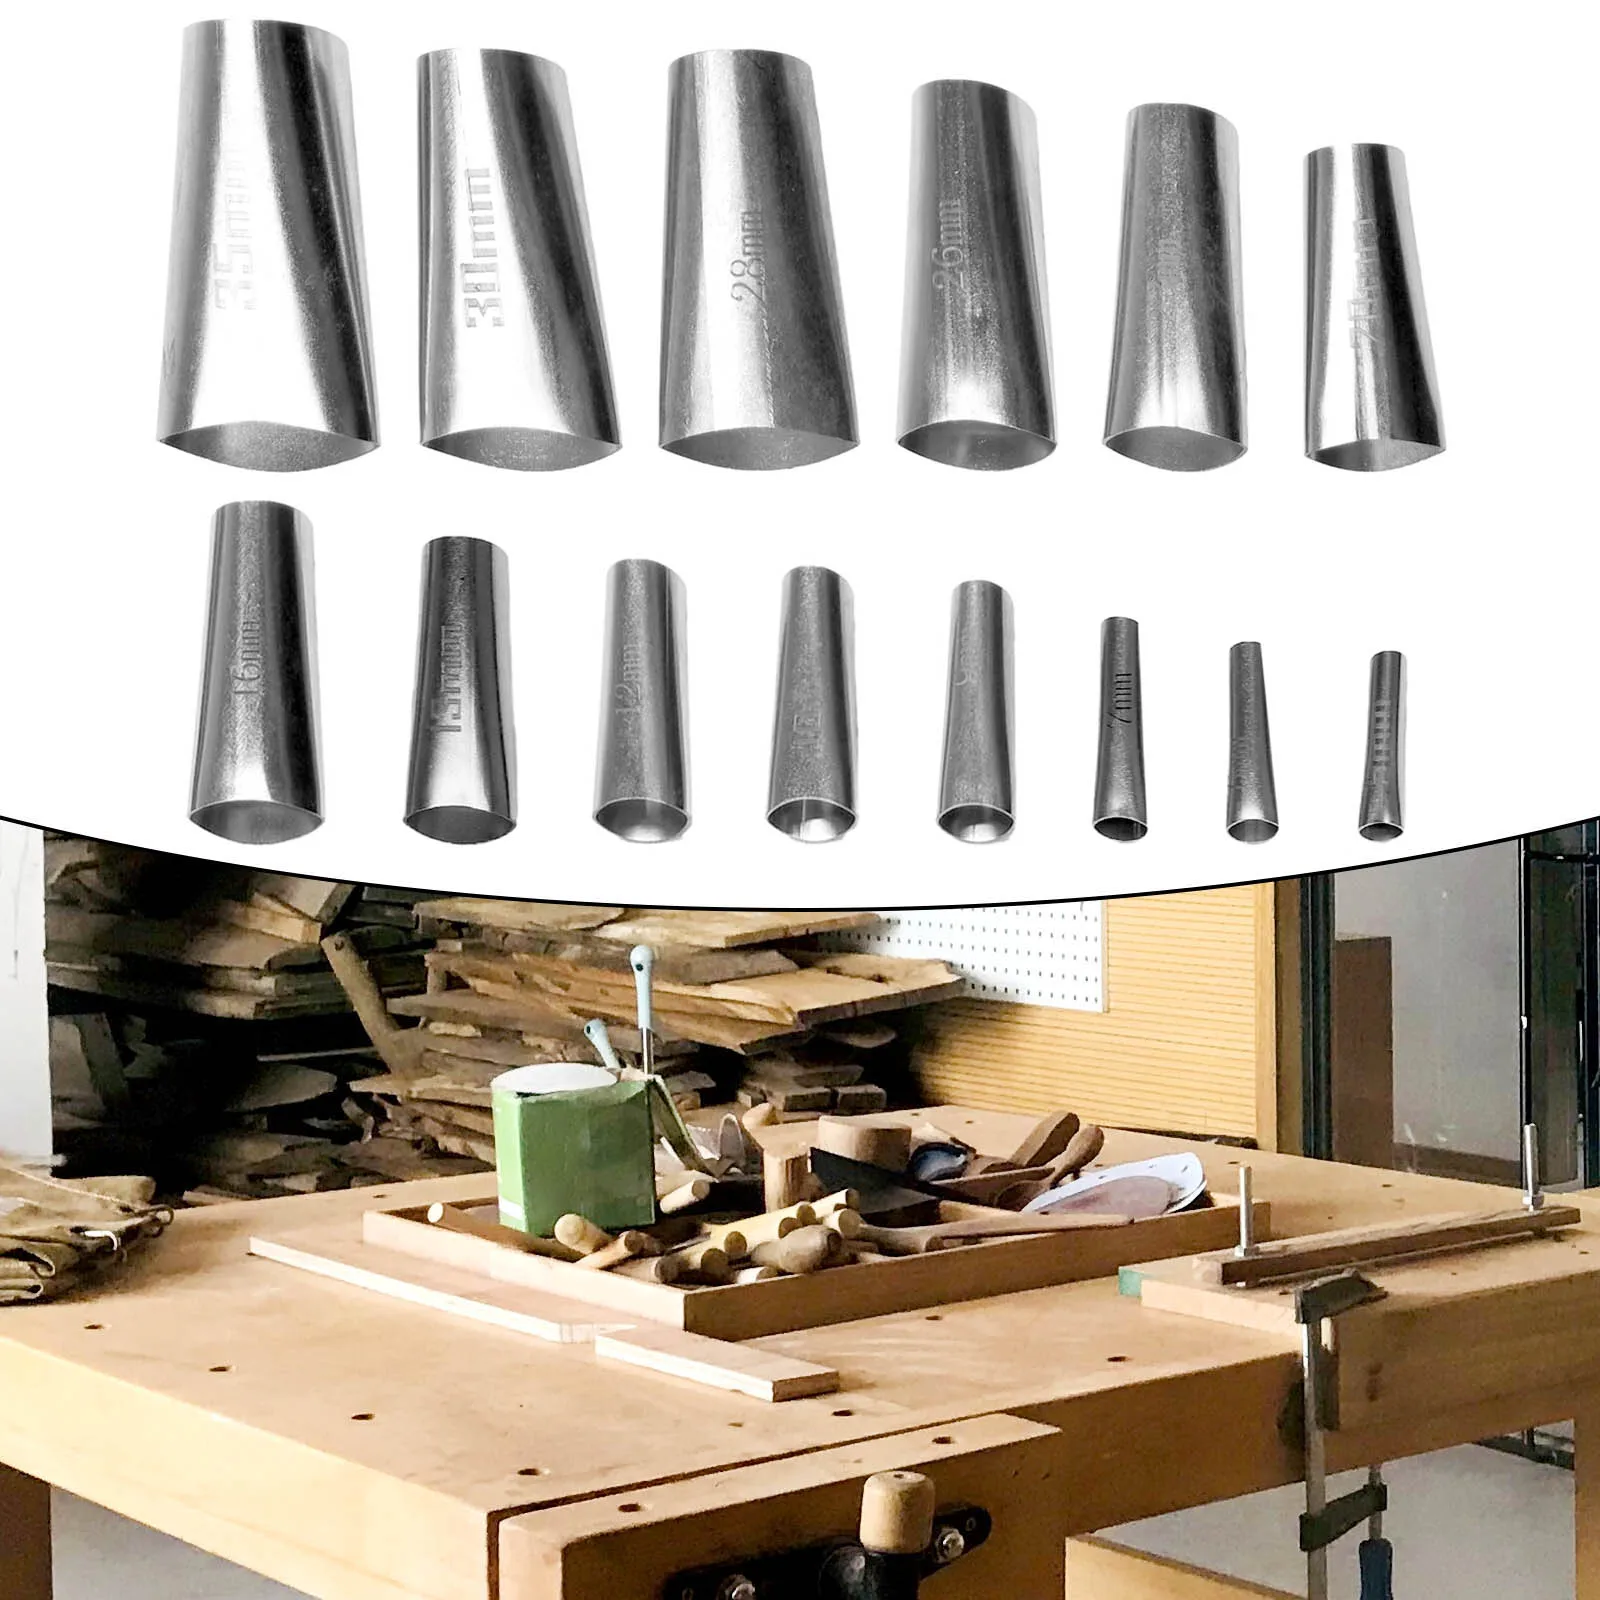 

Caulking Finisher Caulking Nozzle Silver 14pcs Caulk Applicator Stainless Steel Construction Tools Caulking Tips